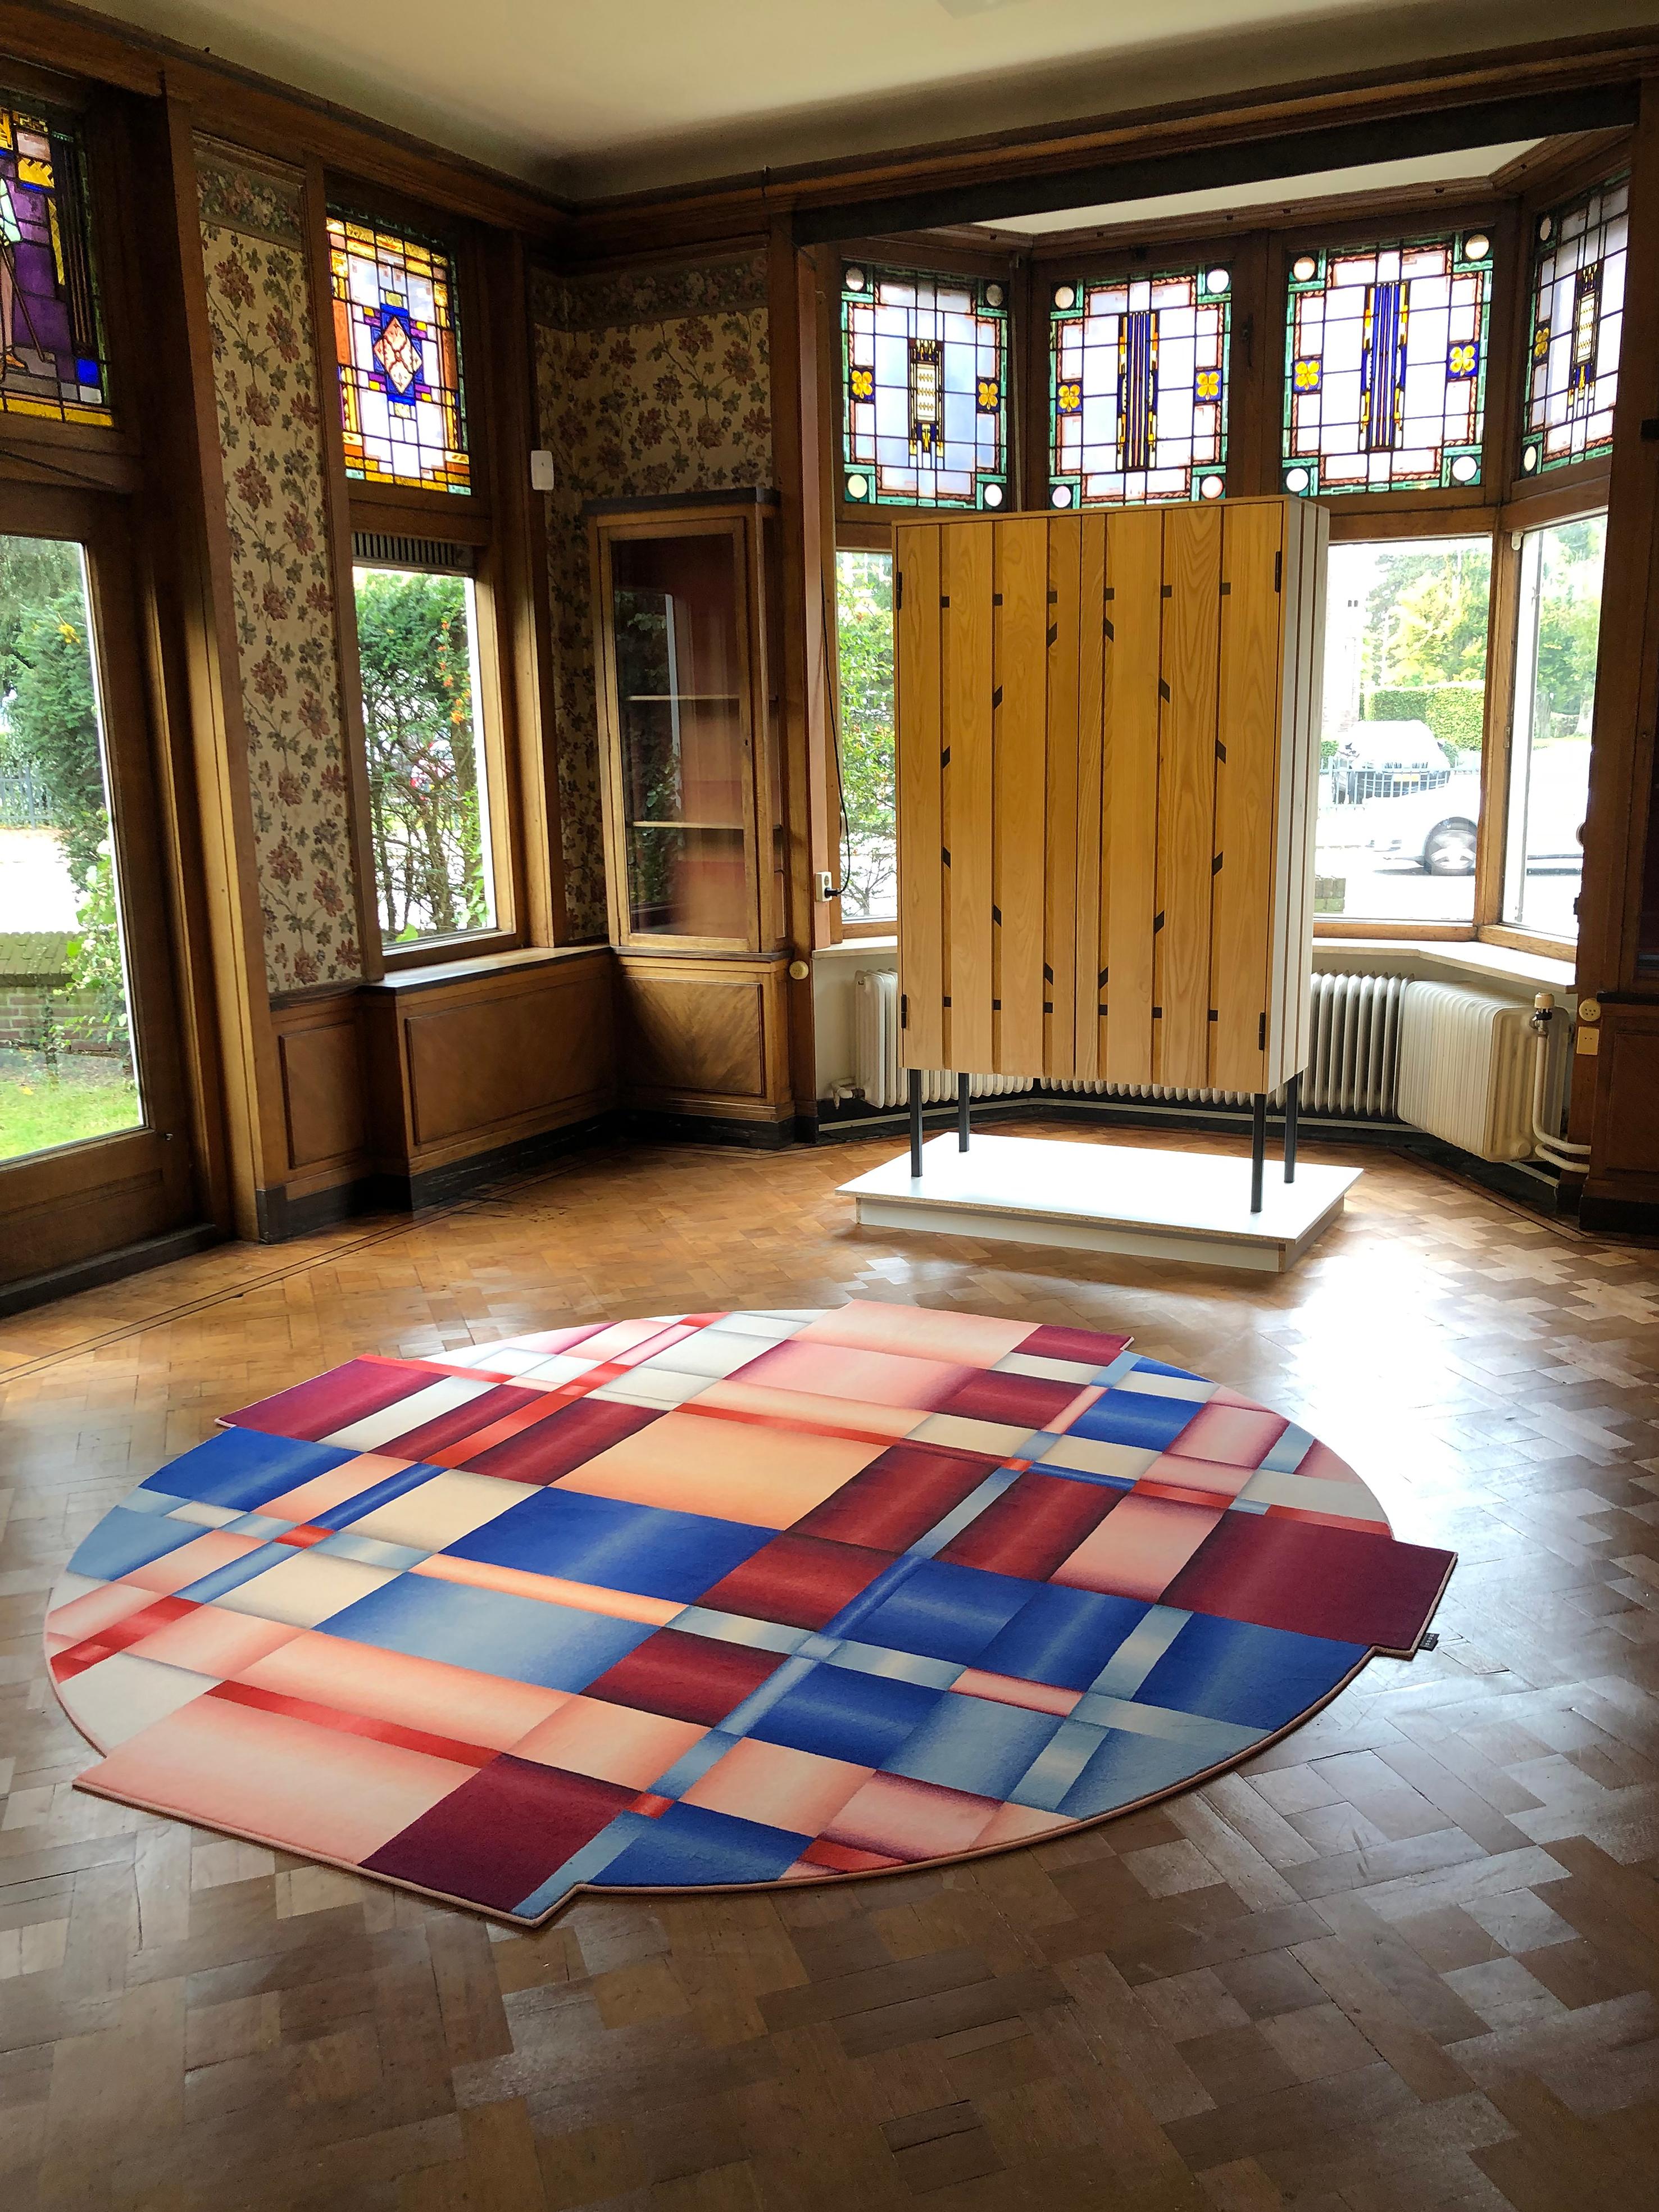 Moooi Lint Magenta round rug in wool with blind hem finish by Visser & Meijwaard

Visser & Meijwaard is a designstudio focused on product- and scenographic exhibition design based in Arnhem, The Netherlands. The studio is run by Dutch designers